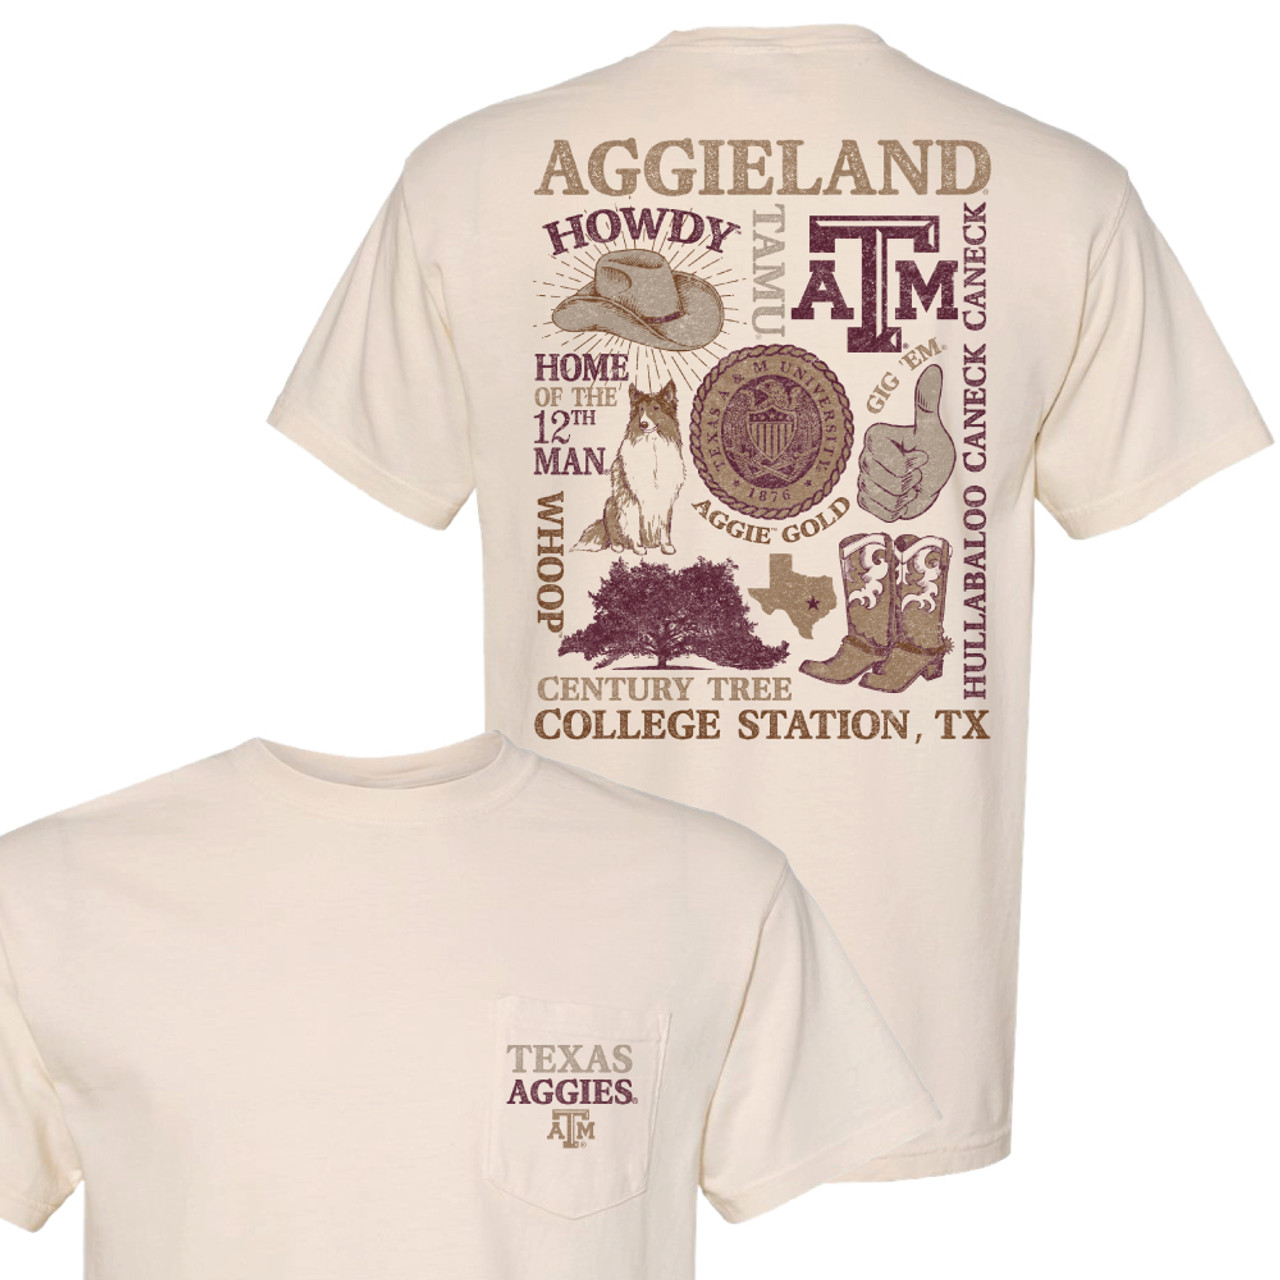 Aggie Anglers cowboy t - shirt